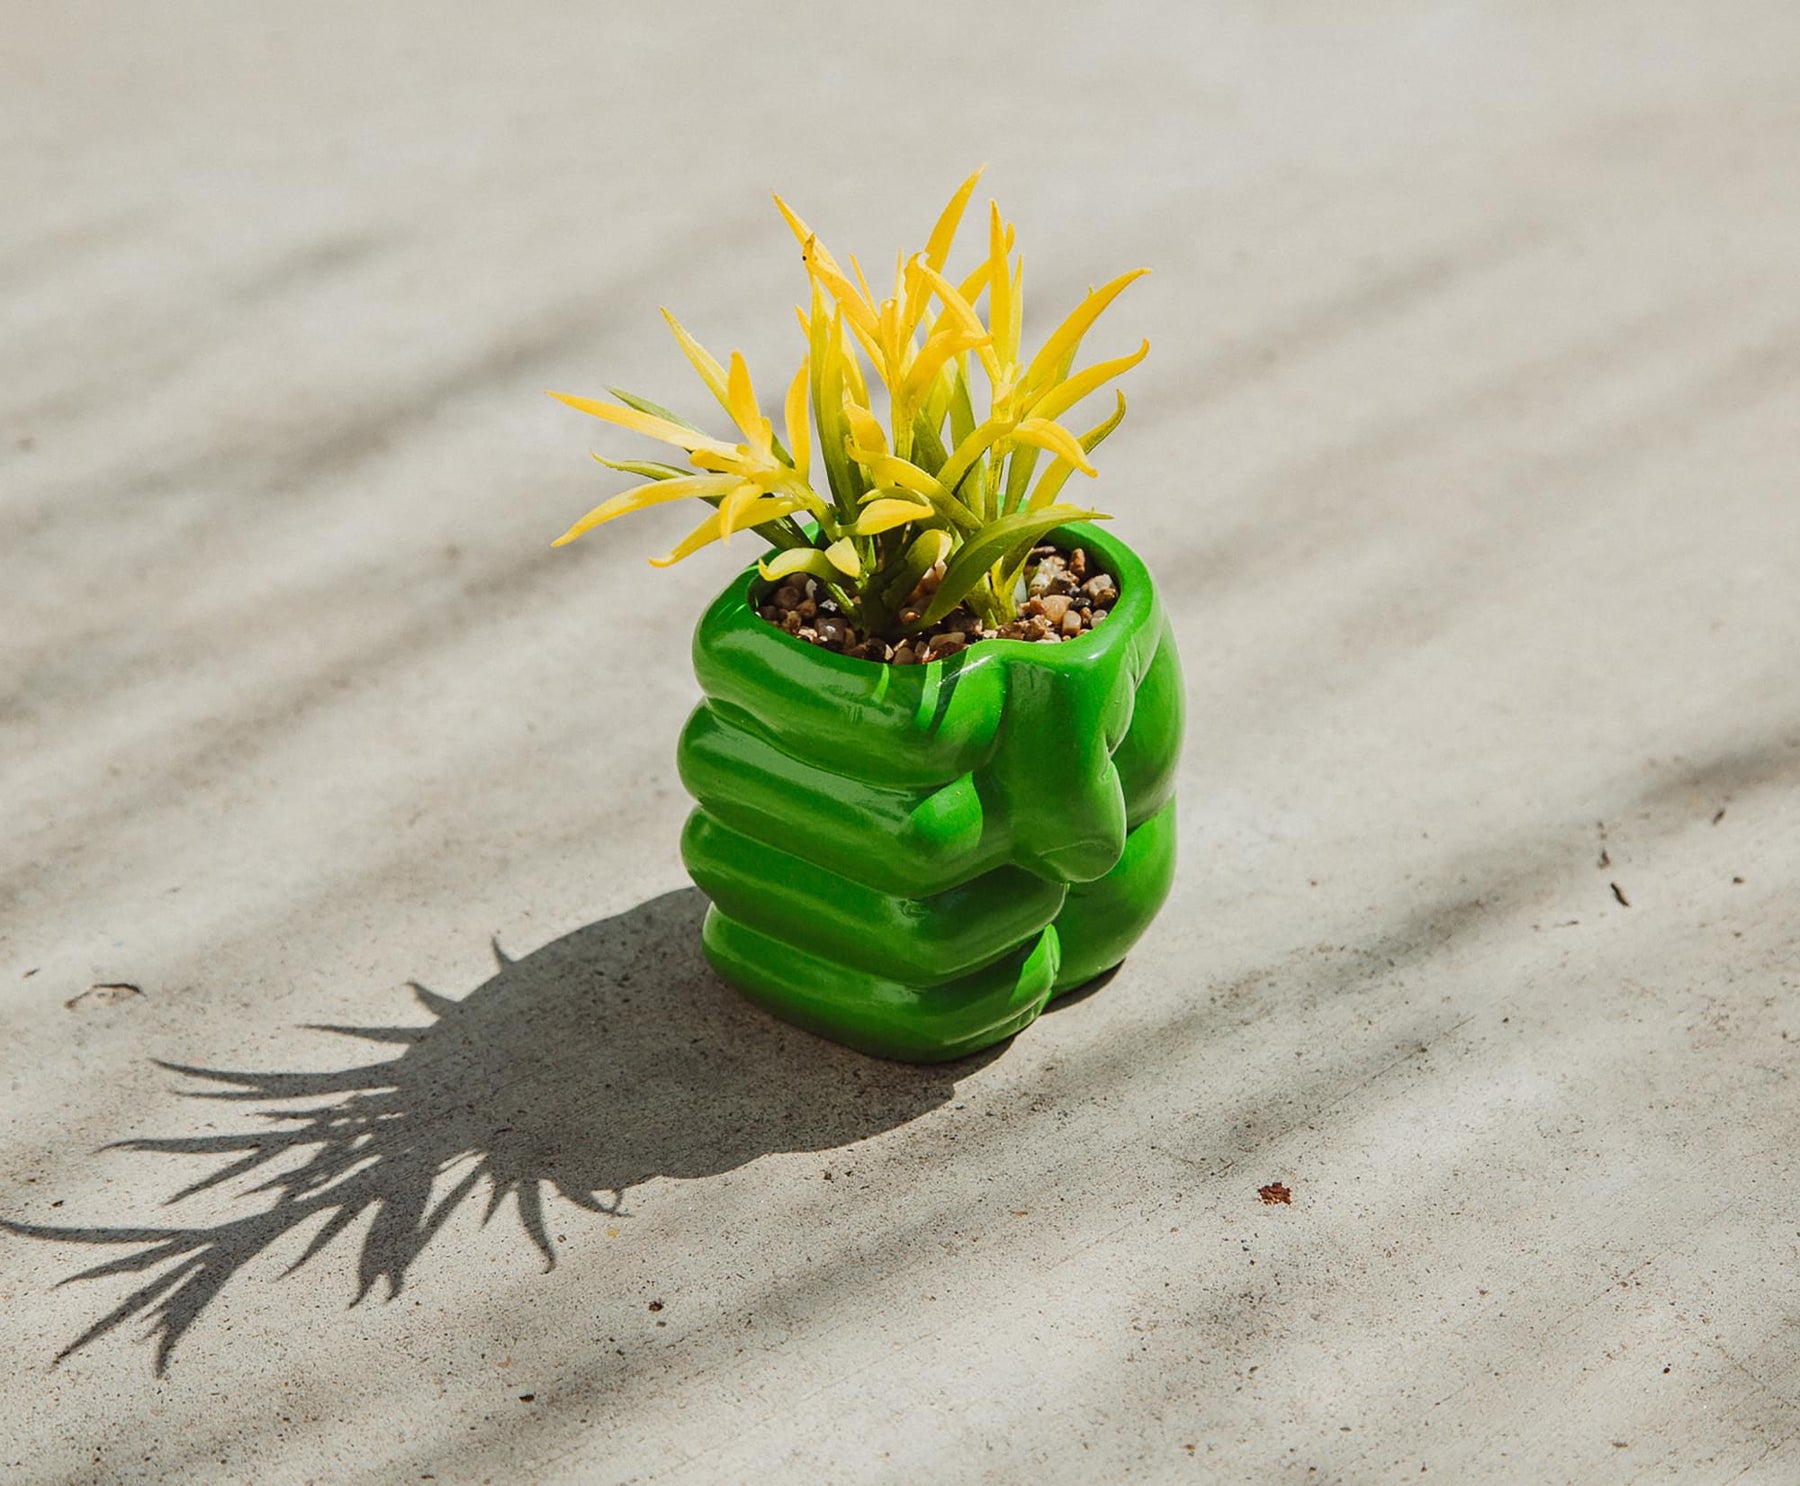 Marvel Comics Hulk Smash Hand 3-Inch Ceramic Mini Planter With Artificial Succulent